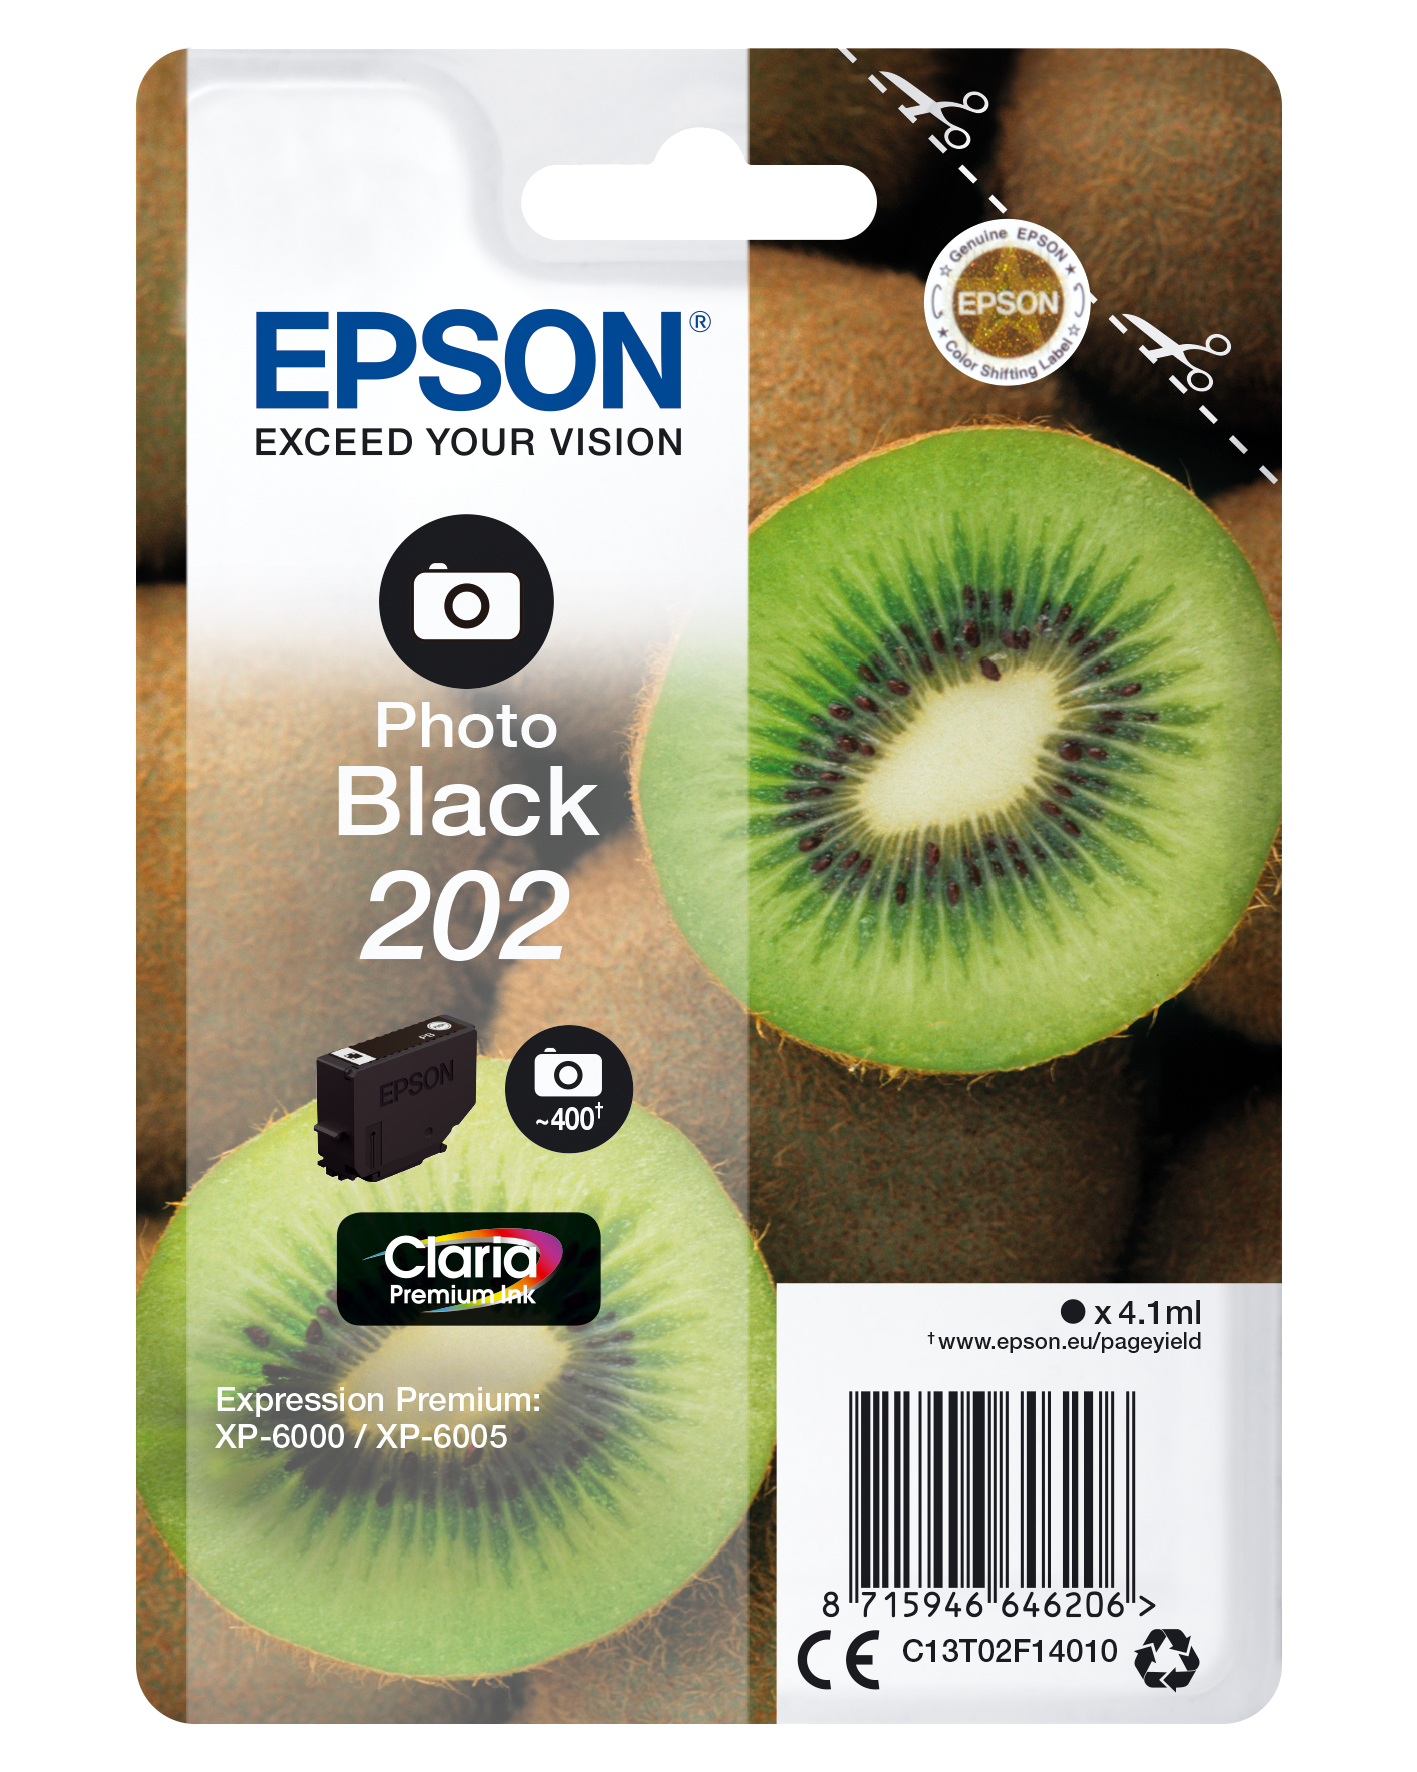 Epson 202 - 4.1 ml - Photo schwarz - Original